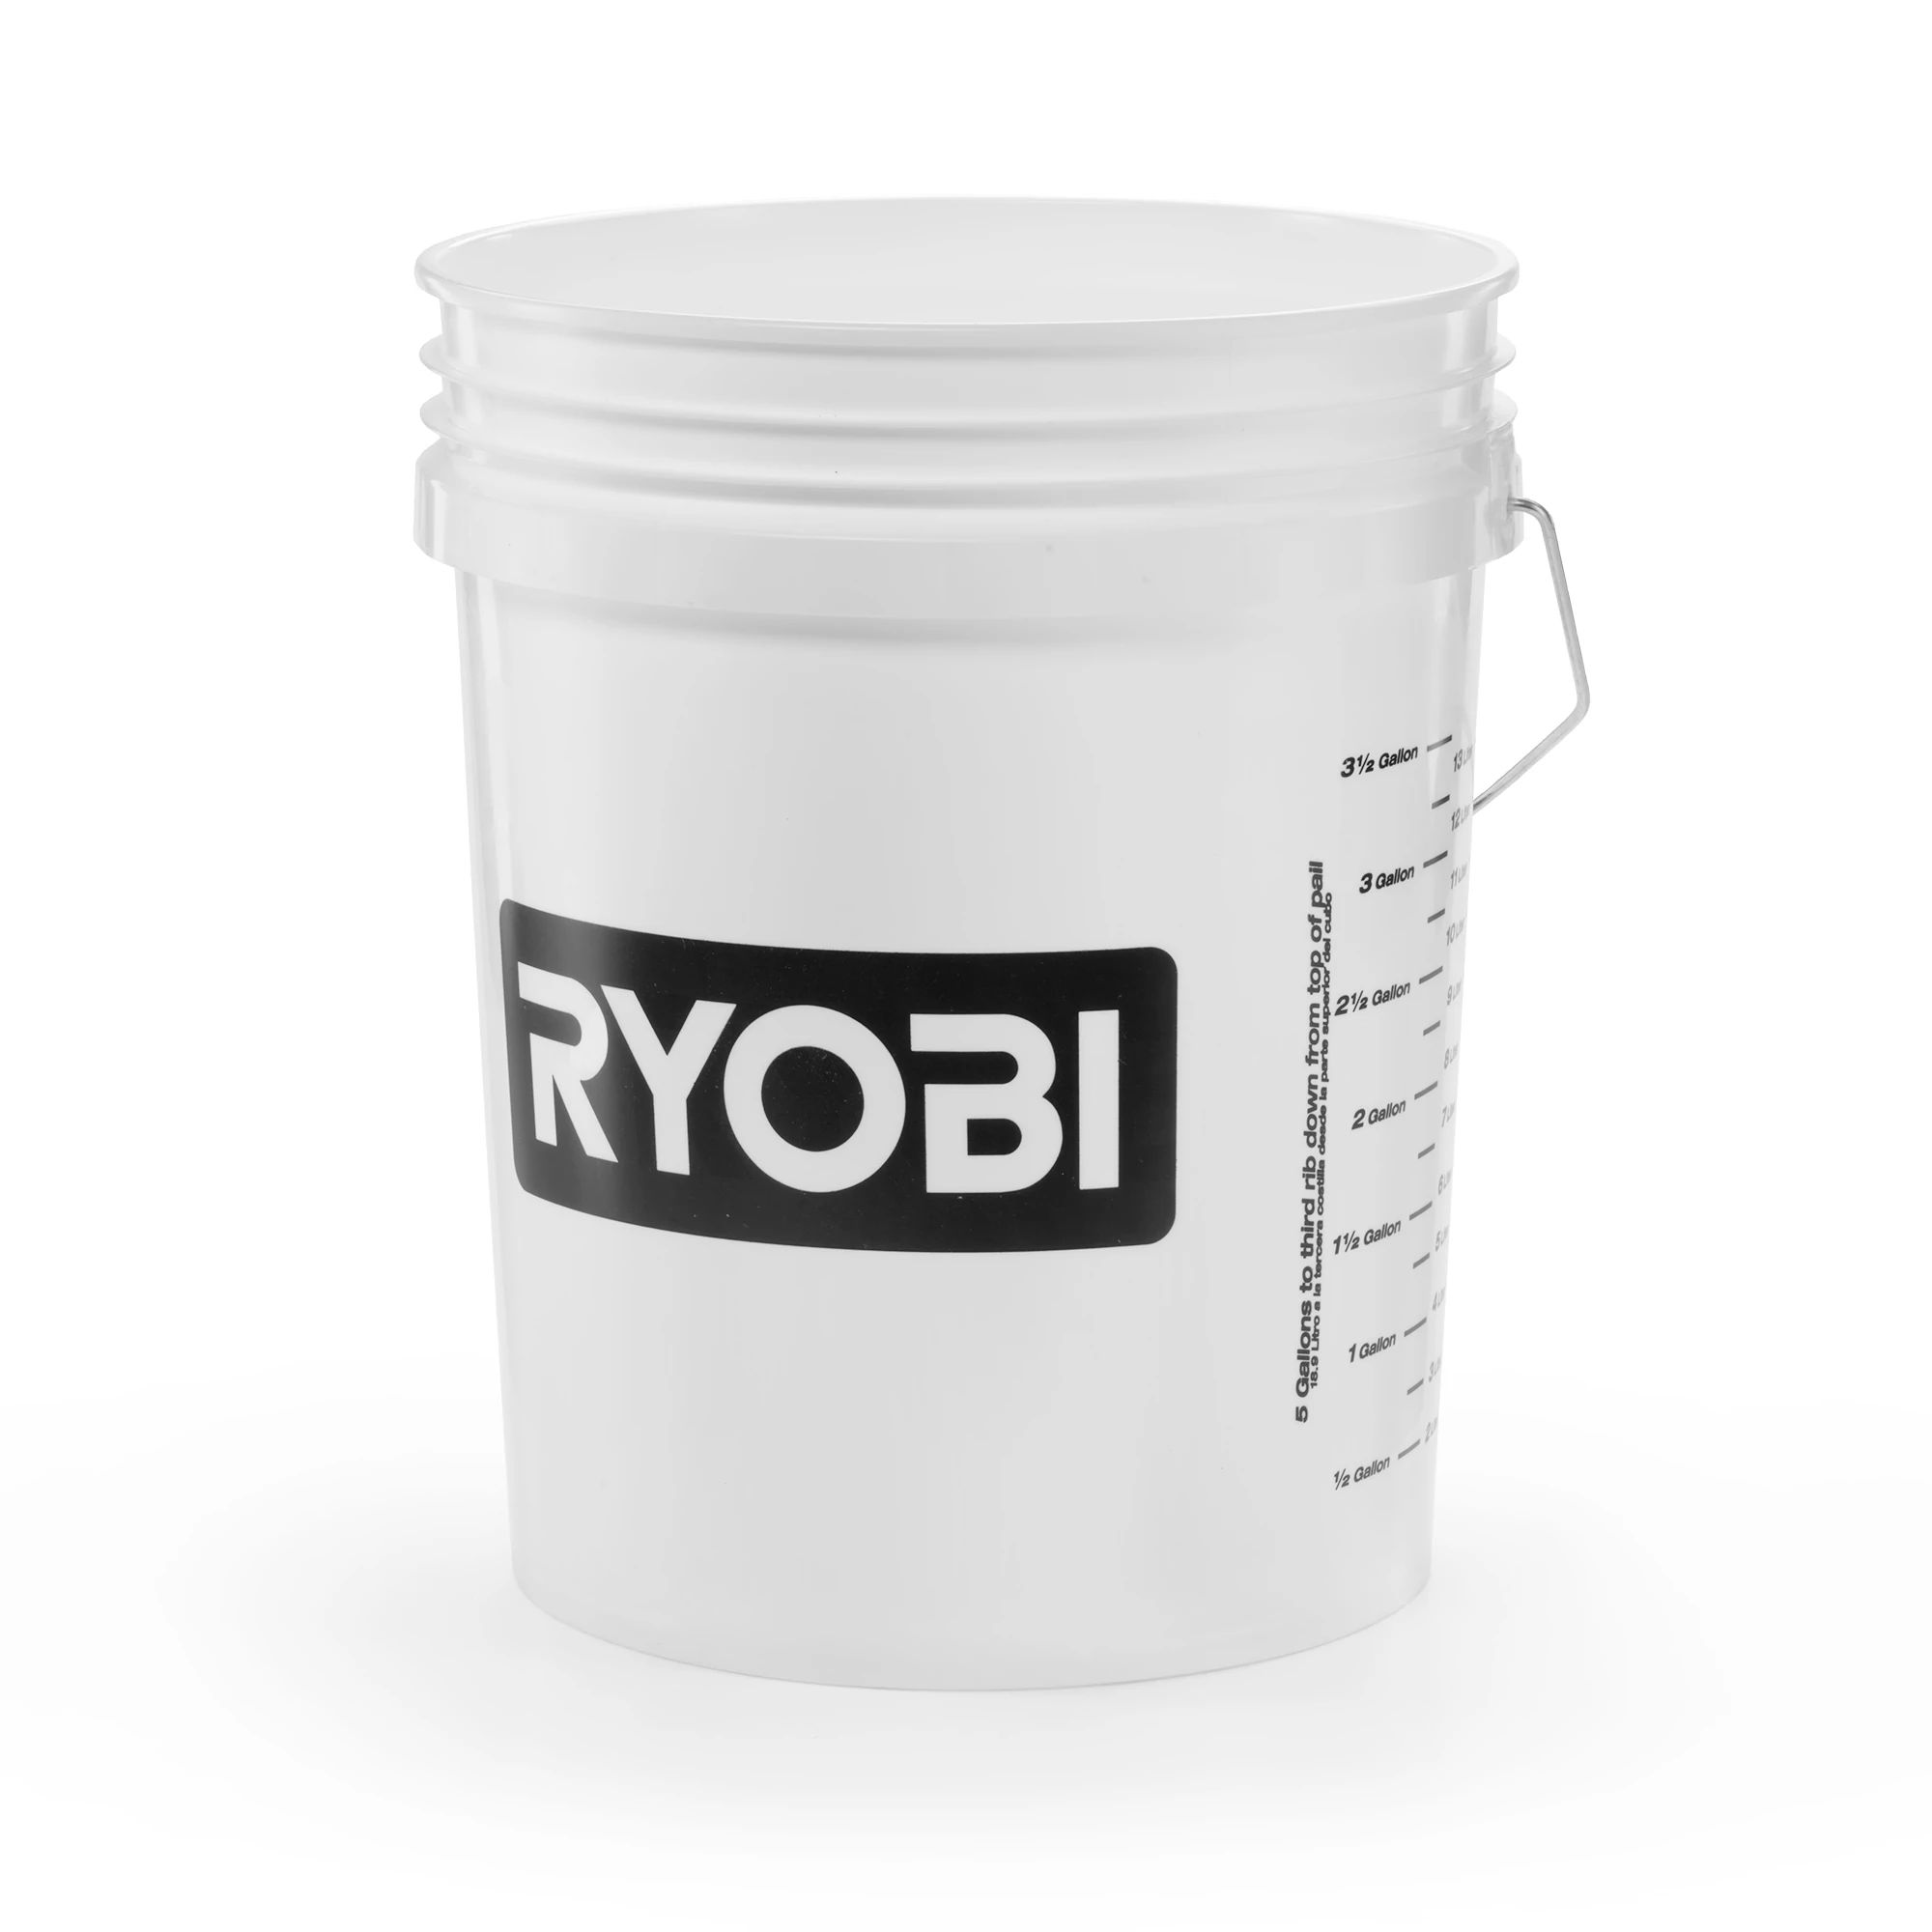 5 Gallon Bucket - RYOBI Tools